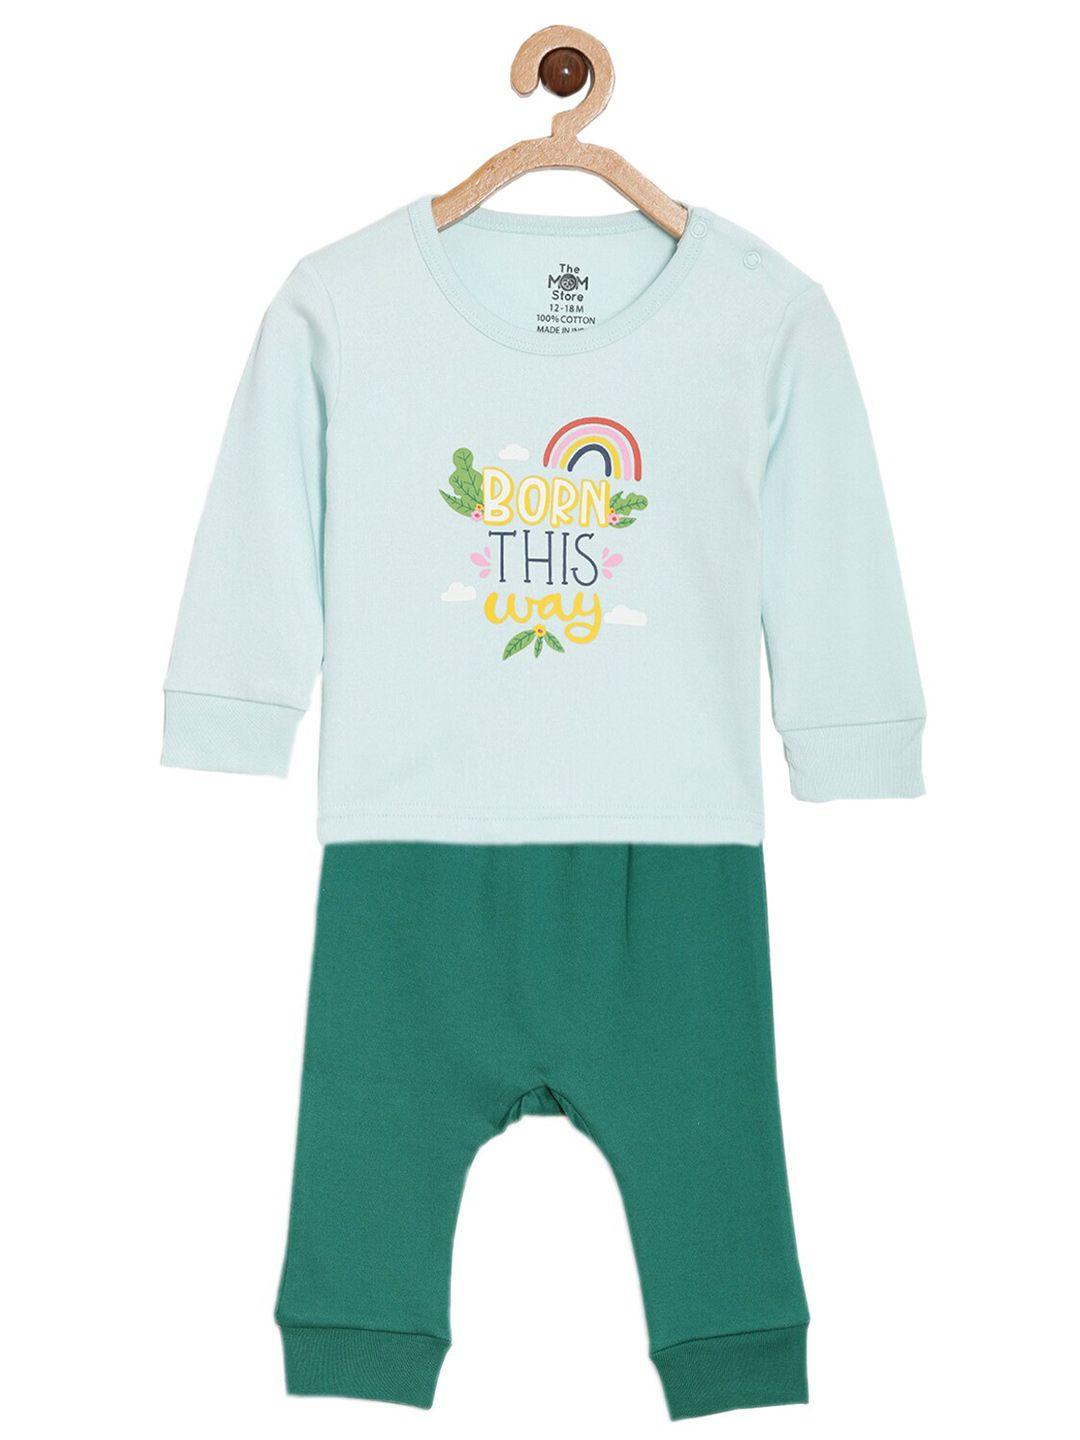 the-mom-store-unisex-kids-green-&-yellow-printed-t-shirt-with-pyjamas